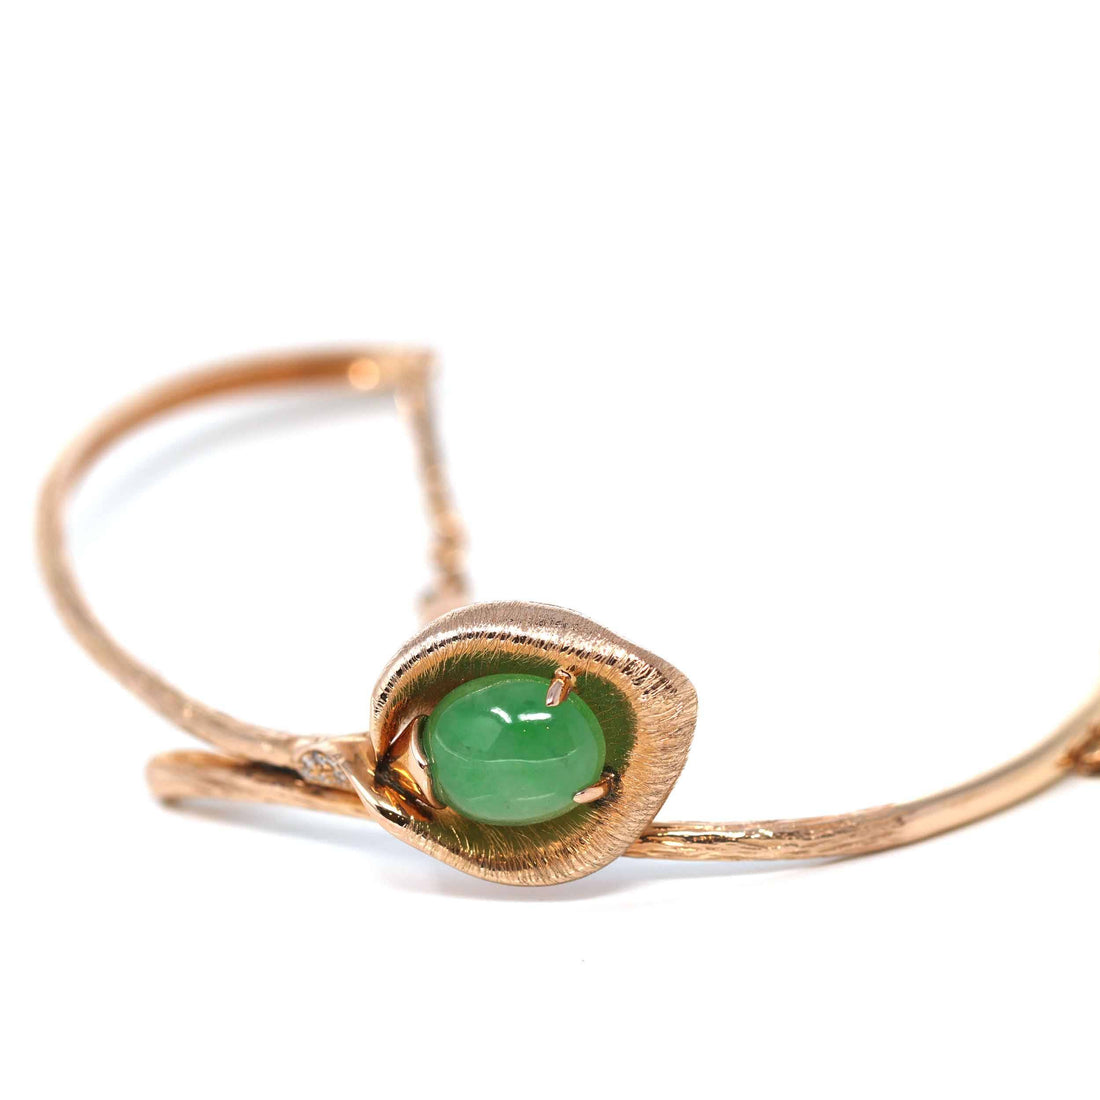 Baikalla Jewelry Gold Jade Bracelet 18k Rose Gold "Morning Glory" Half Bracelet Bangle with Green Imperial Jade & Diamonds